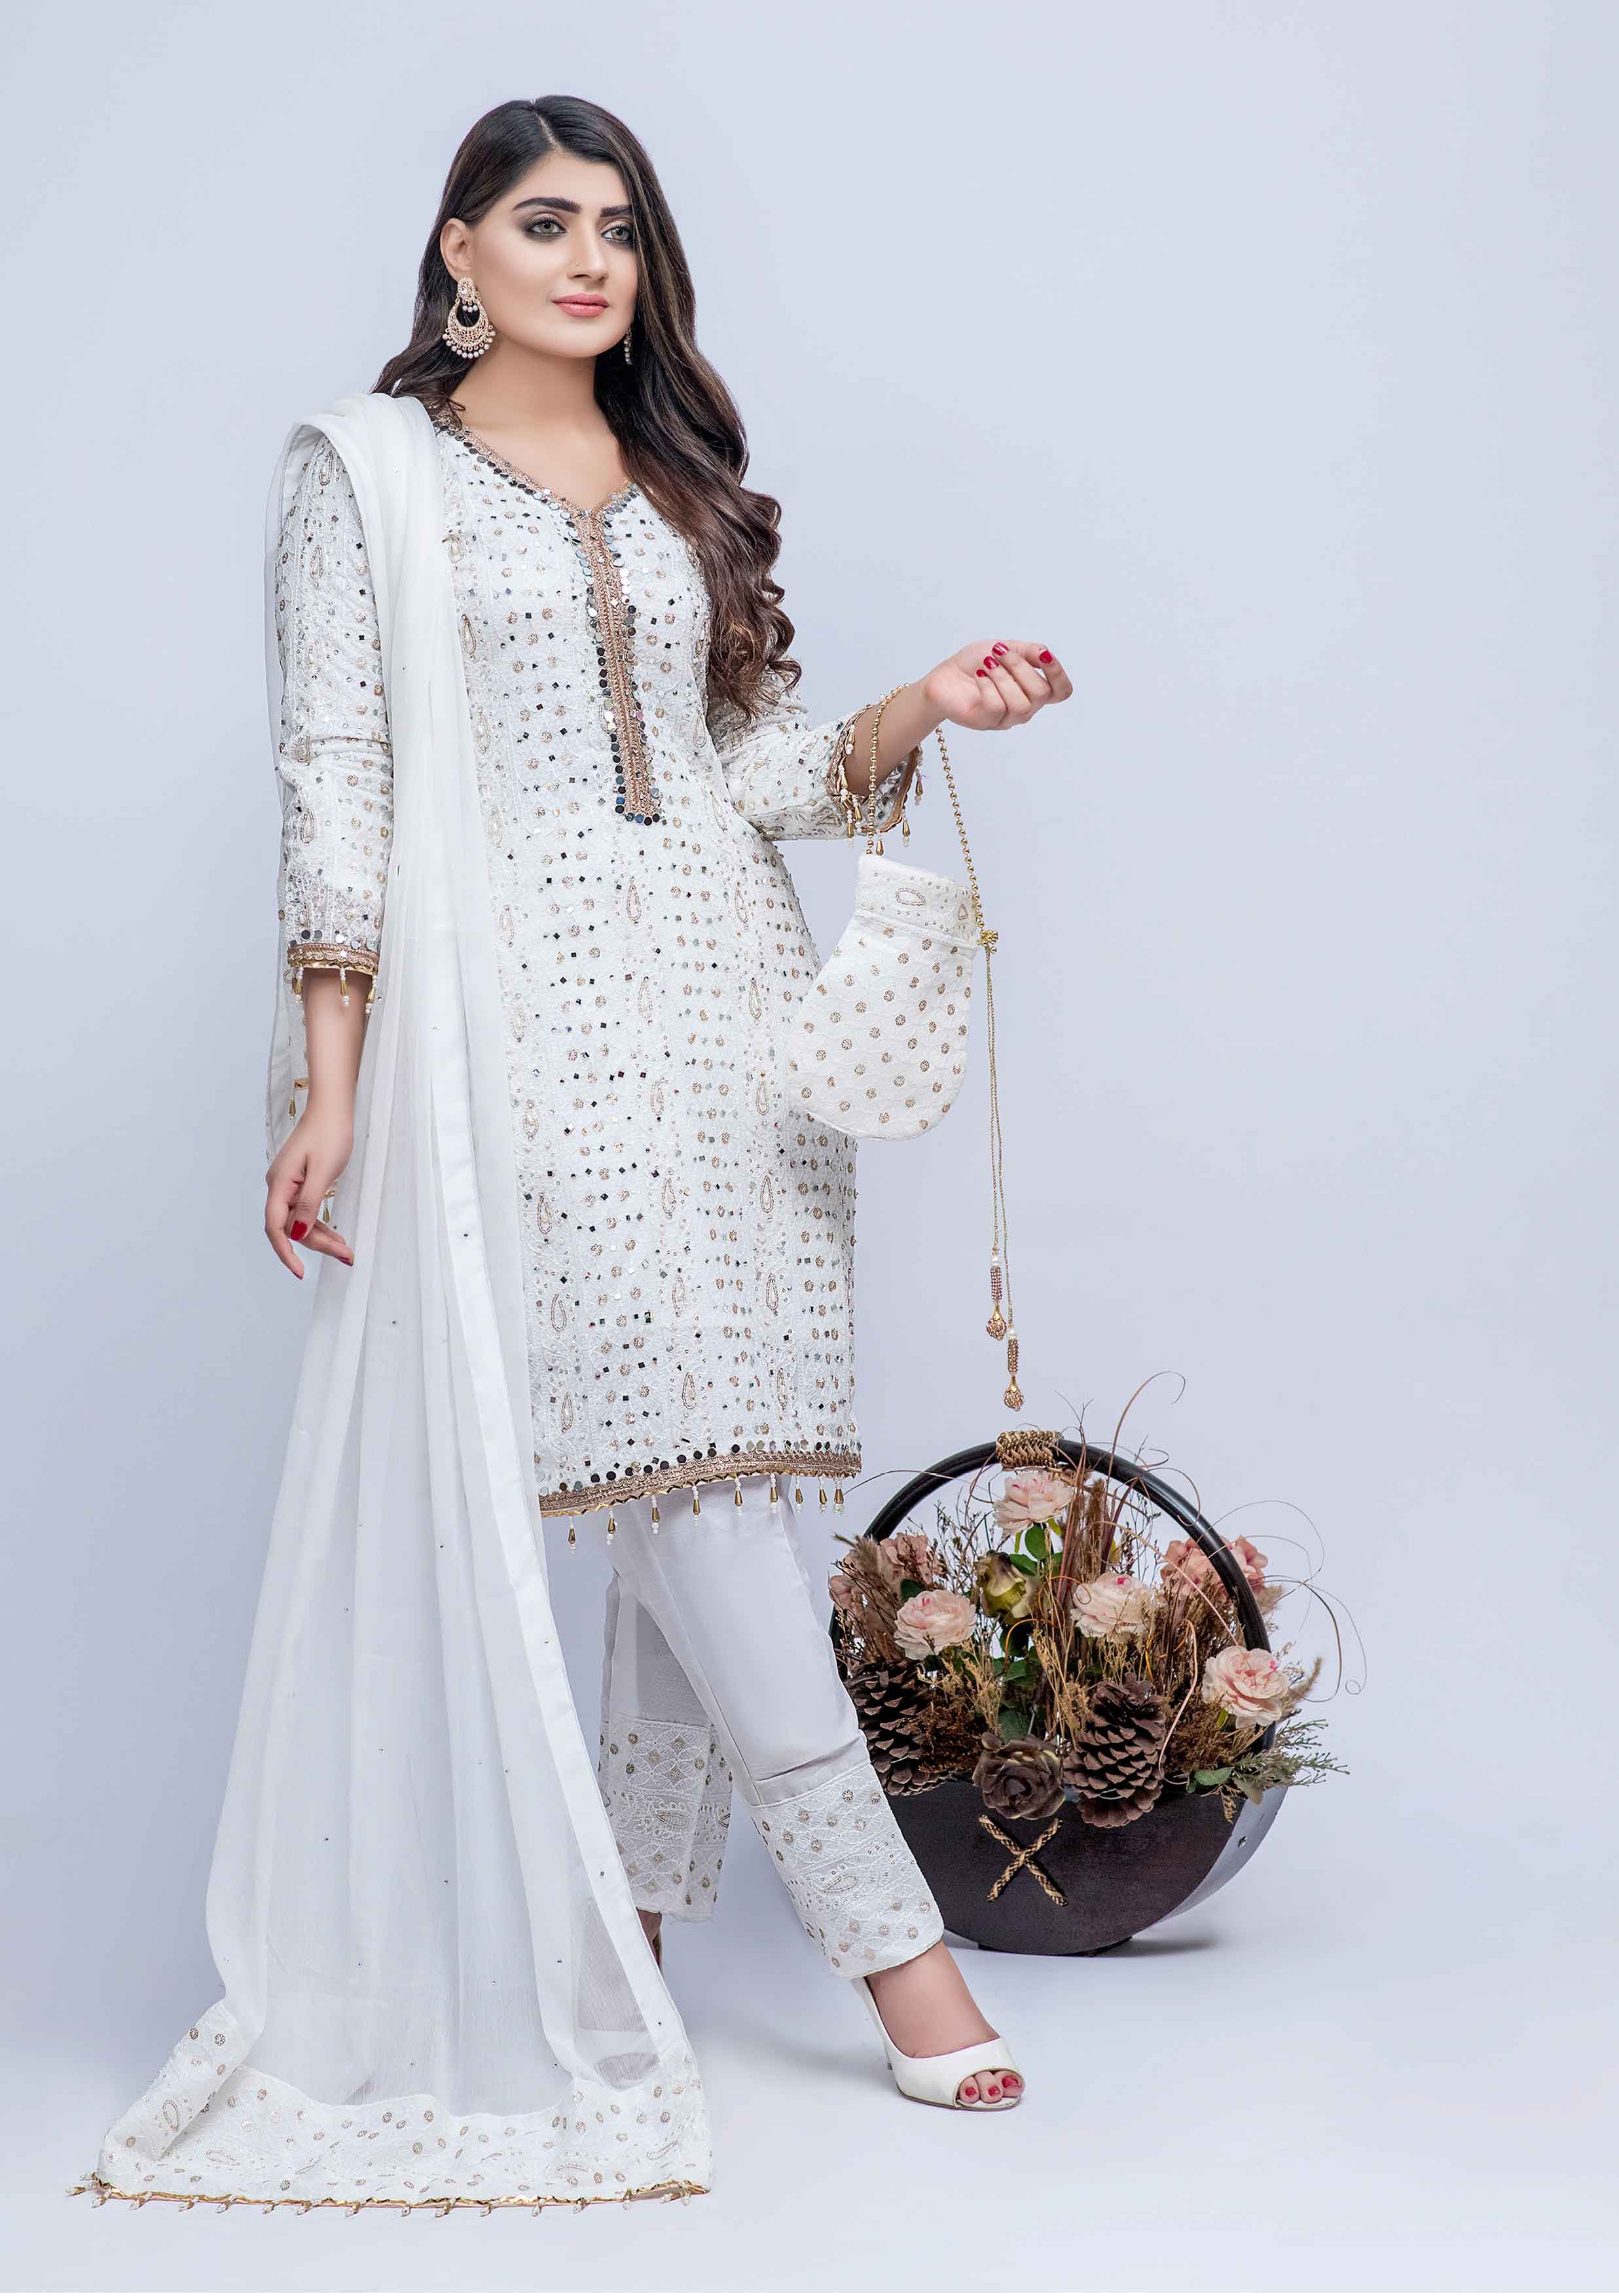 Ladies Pakistani Designer Formal Off White Suit With Clutch Bag